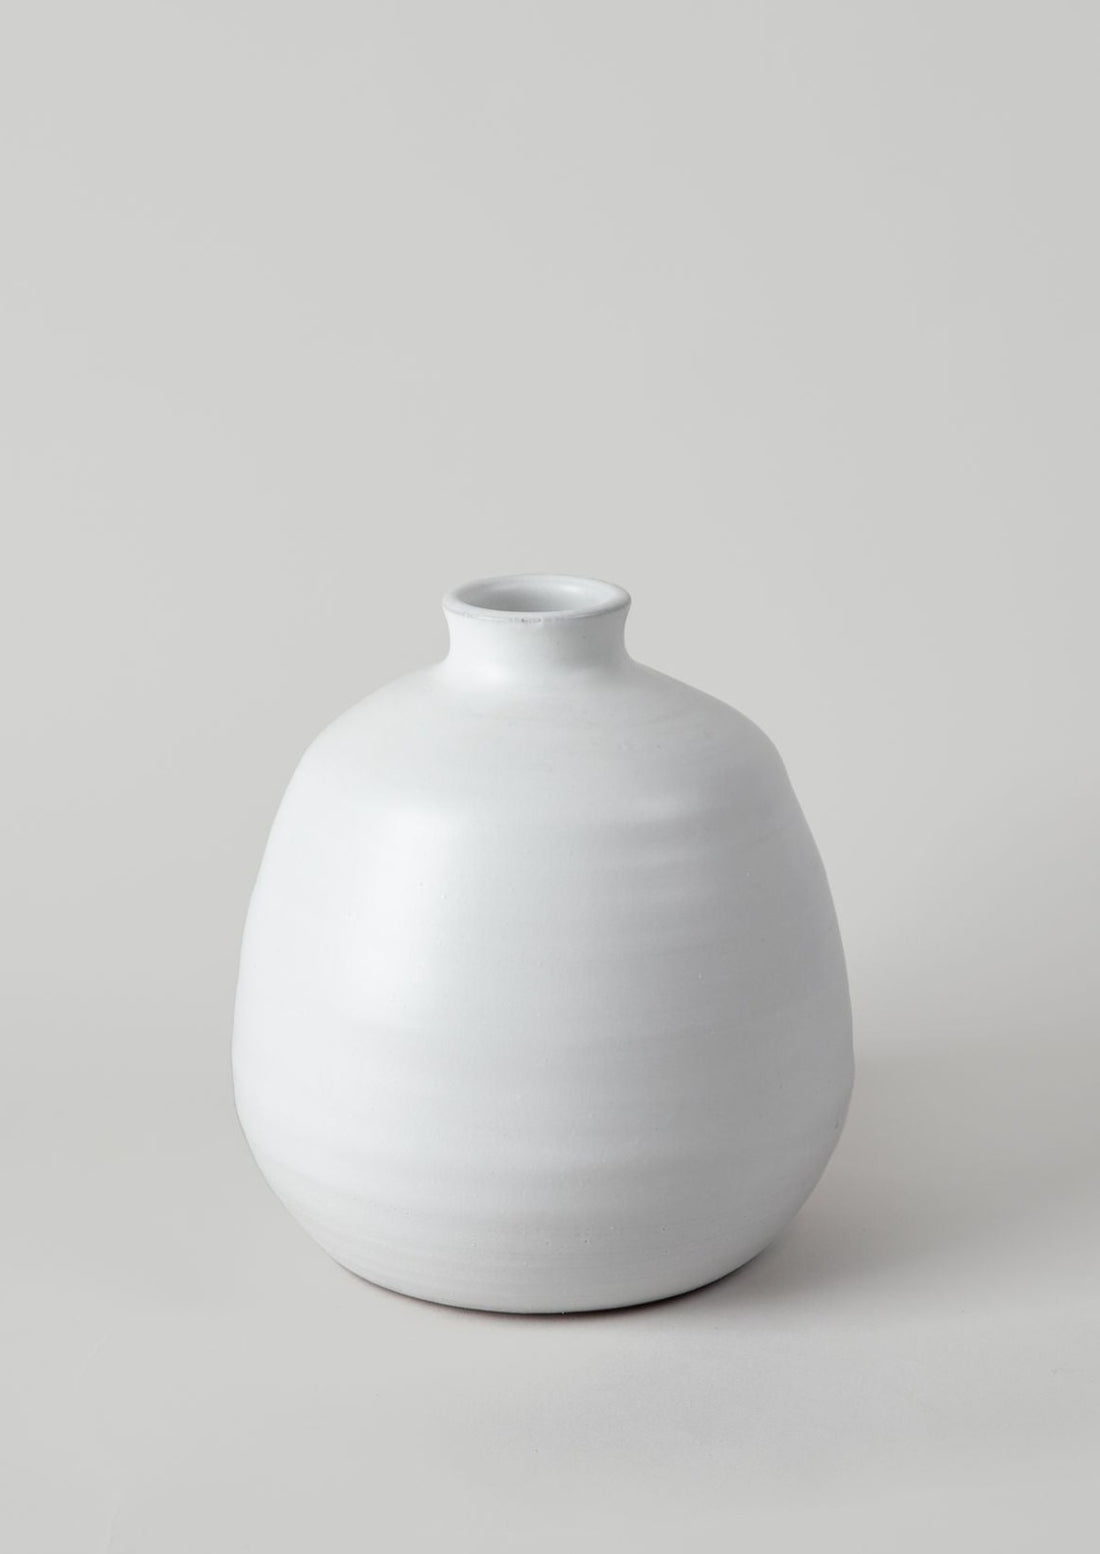 Handmade Ceramic Ronda Vase in Matte White Glaze